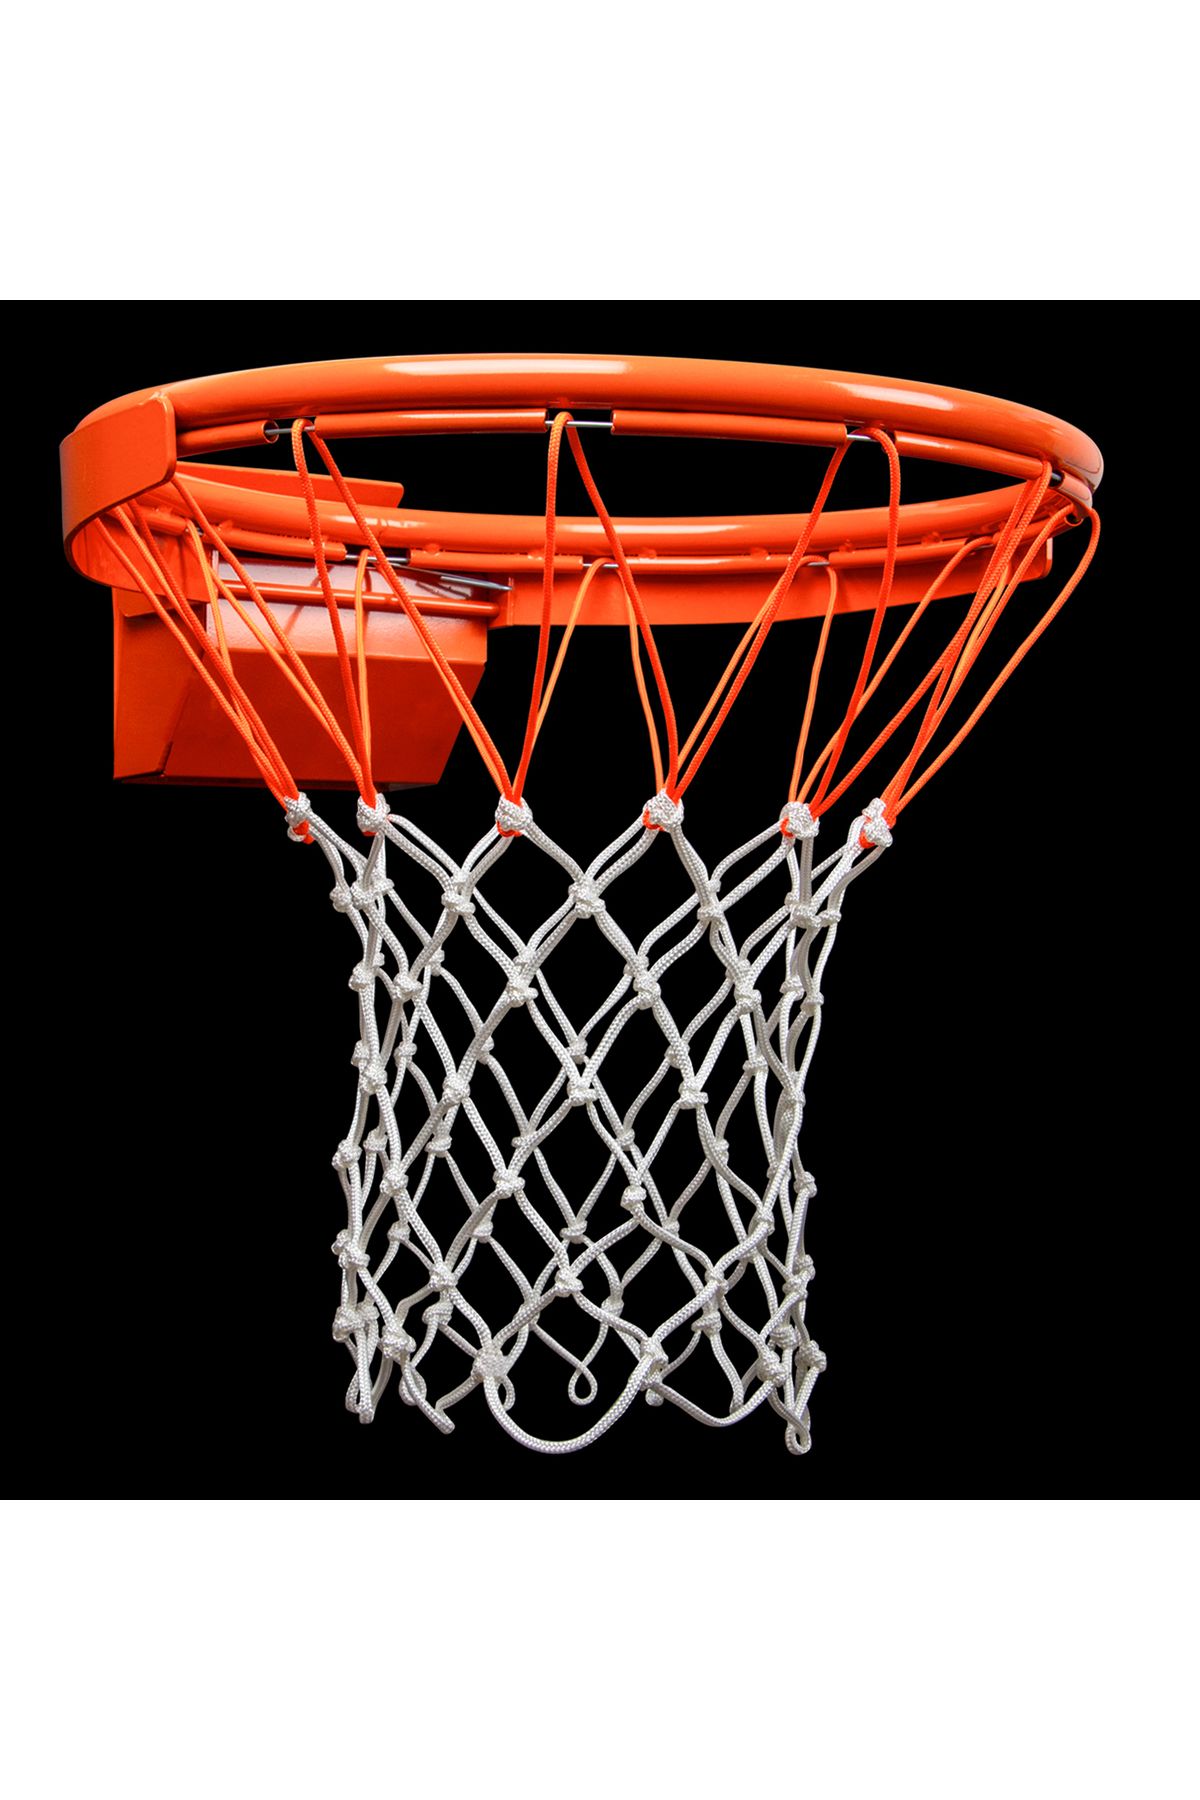 Nodes Basketbol Pota Filesi - Profesyonel - Nba Model - 2 Renk - 1 Adet